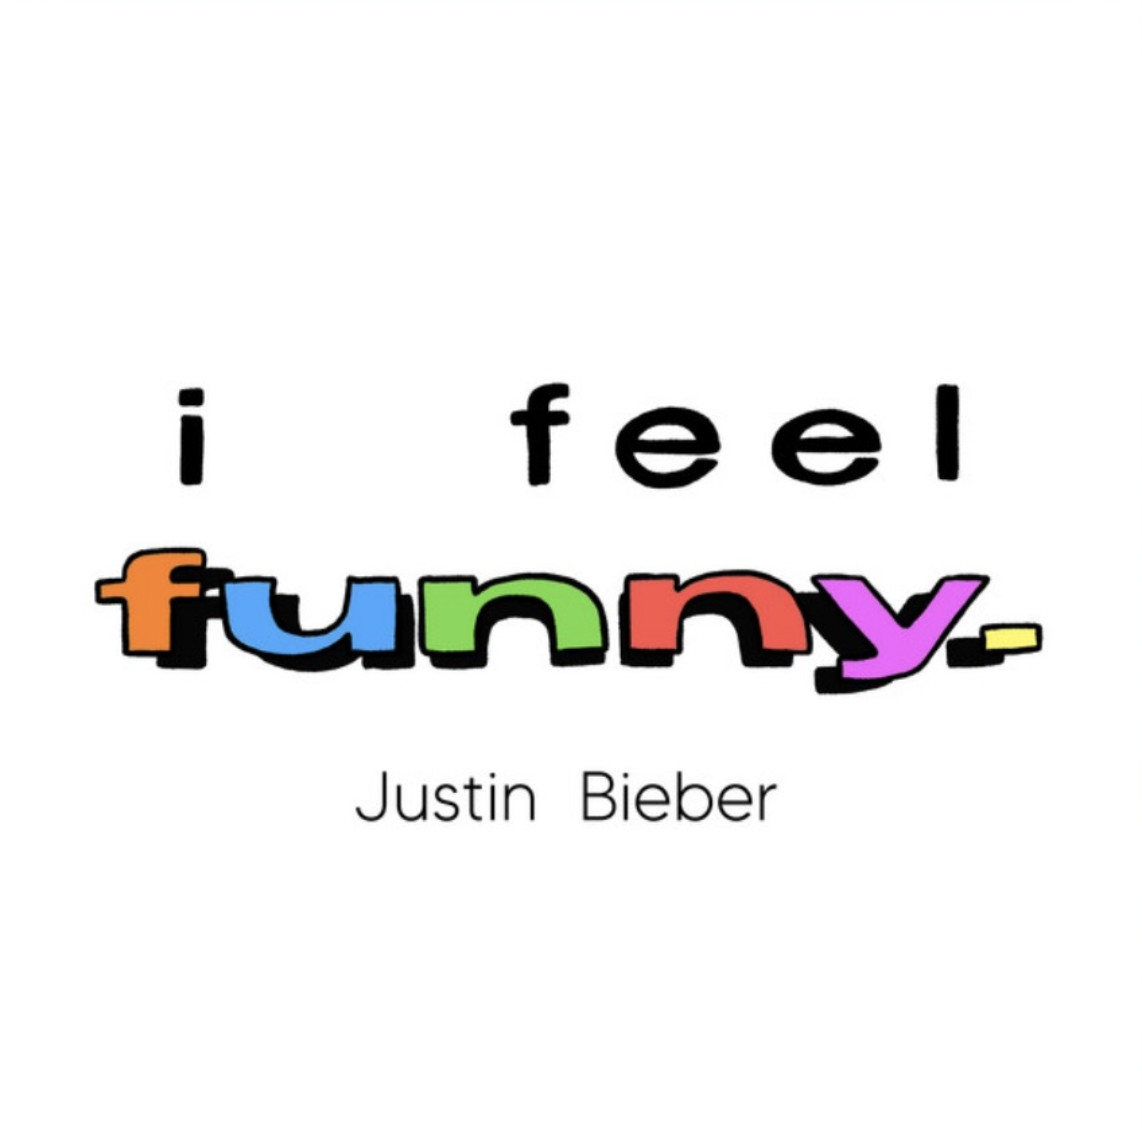 Justin Bieber & Lyrical Lemonade Team Up For Silly Song & Video, “I Feel Funny”